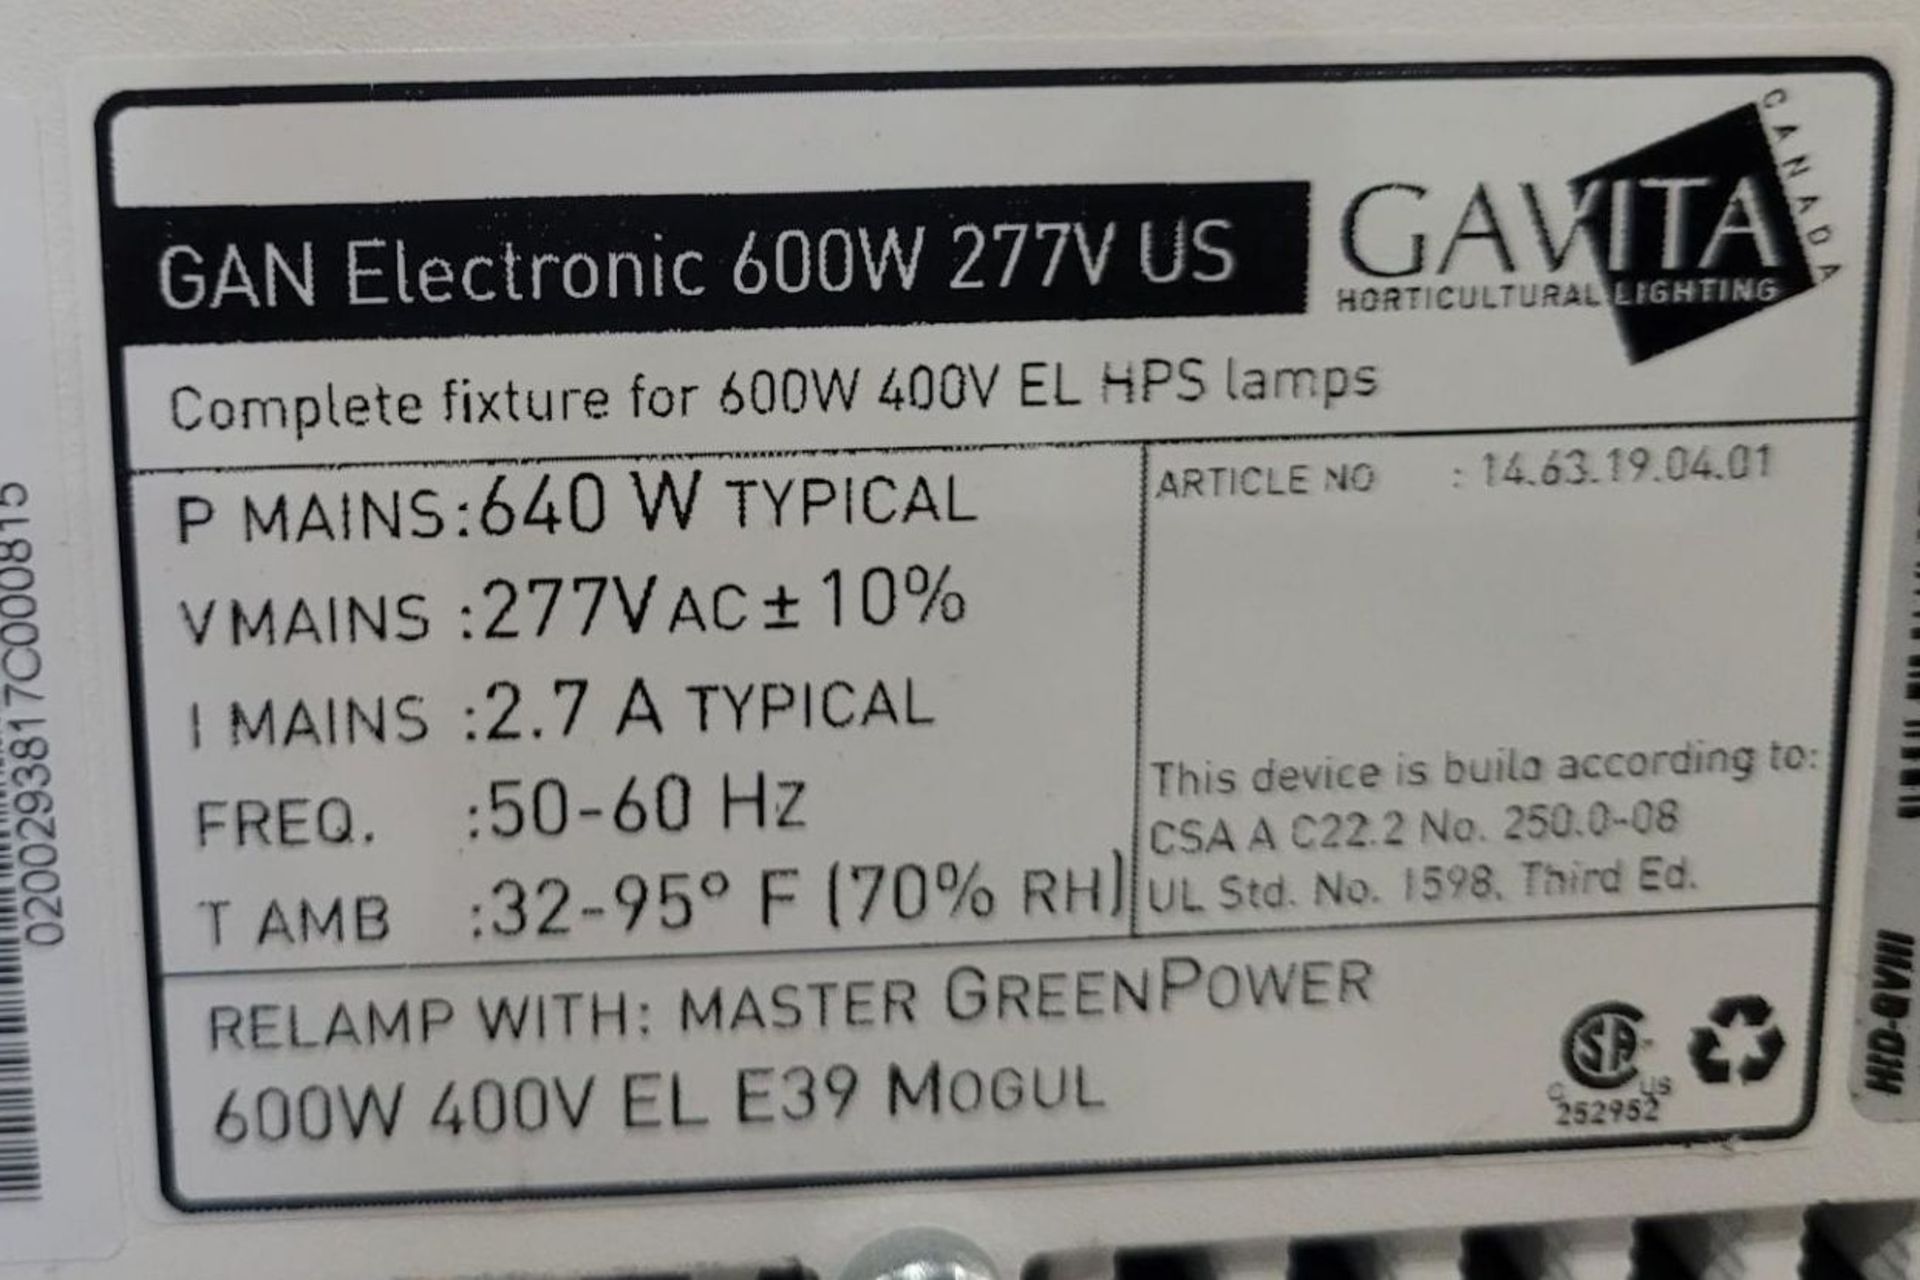 Lot of (50) Used Gavita Pro Grow Lights 600 SE Fixture 277 Volts. - Image 2 of 2